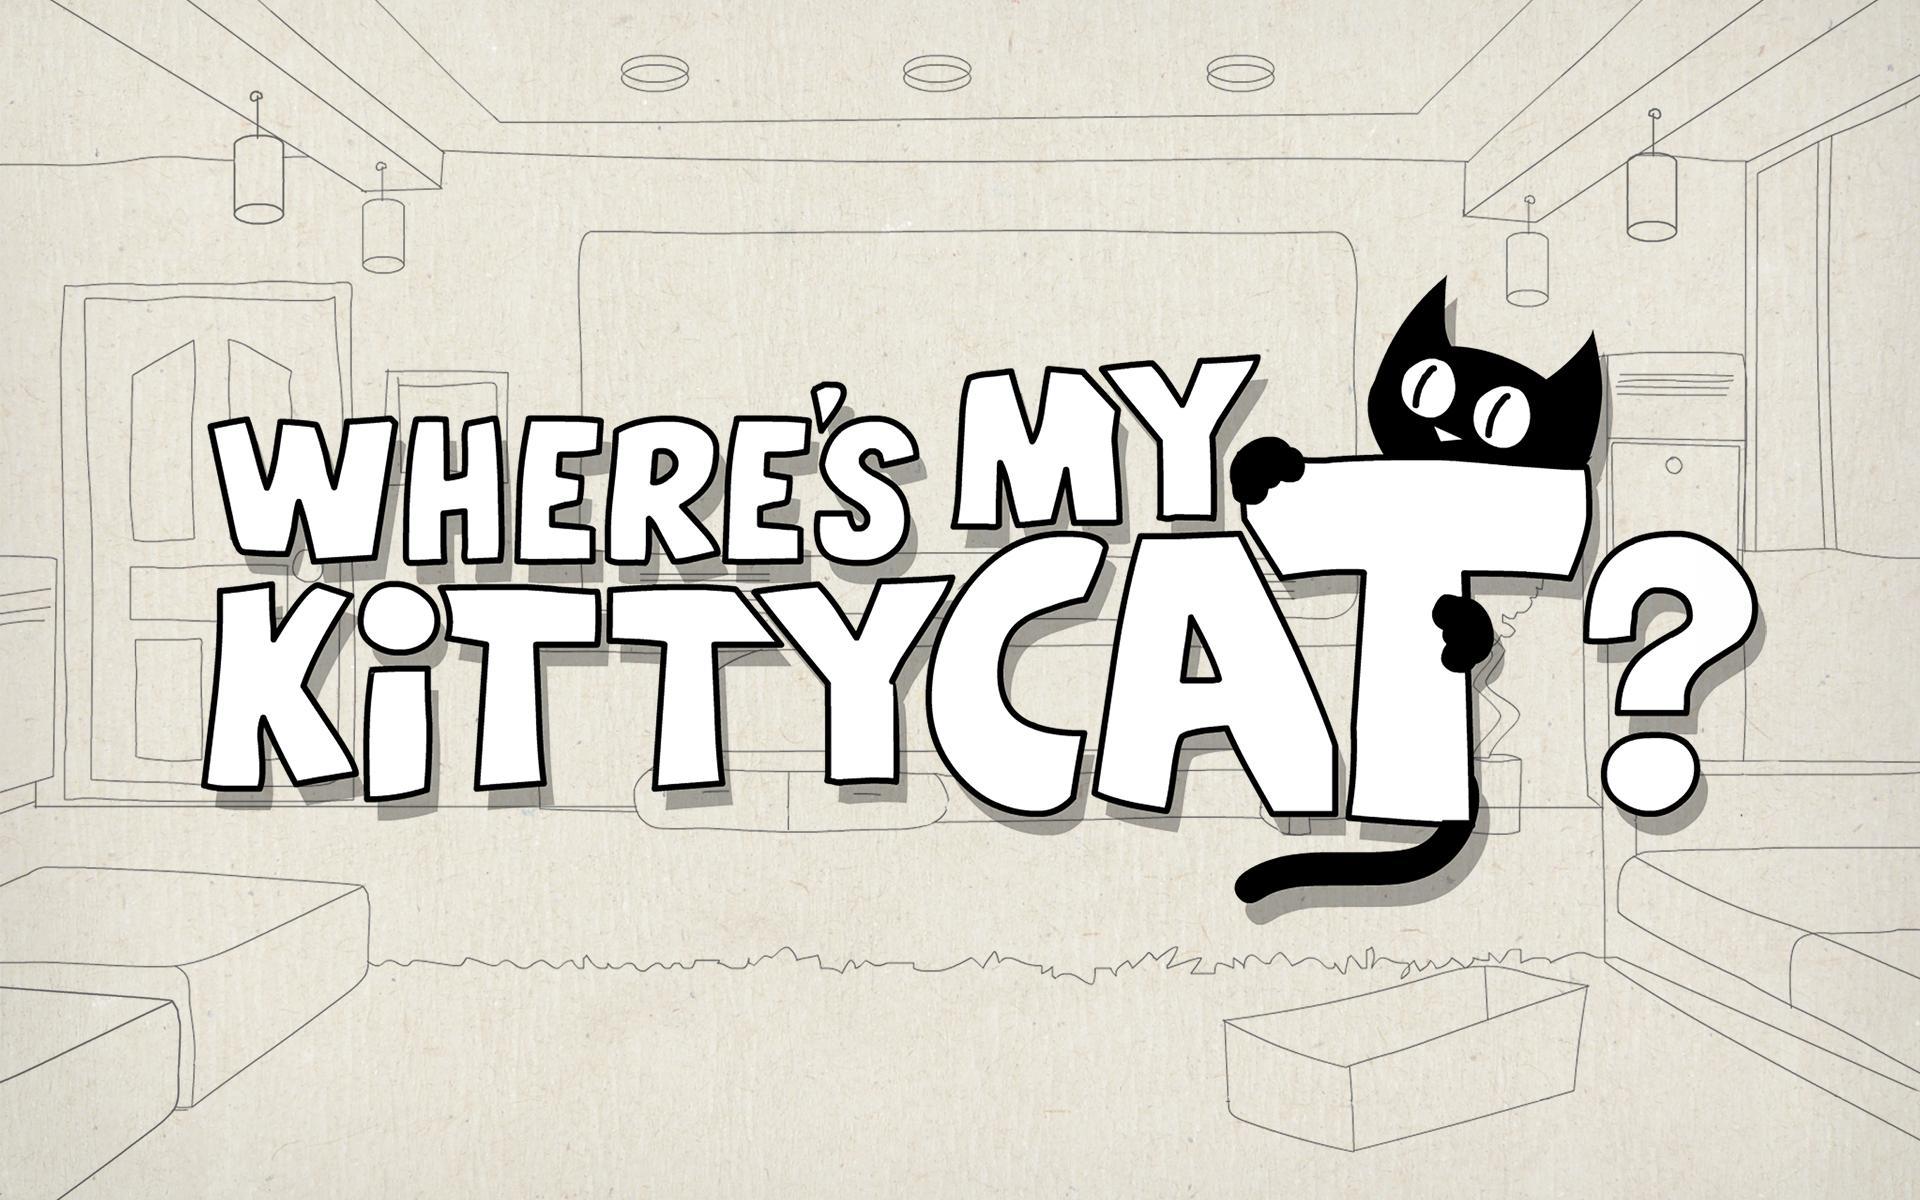 It s my cat. My Cat игра. Business Cats игра. Китти Кэт. "Where Cat".